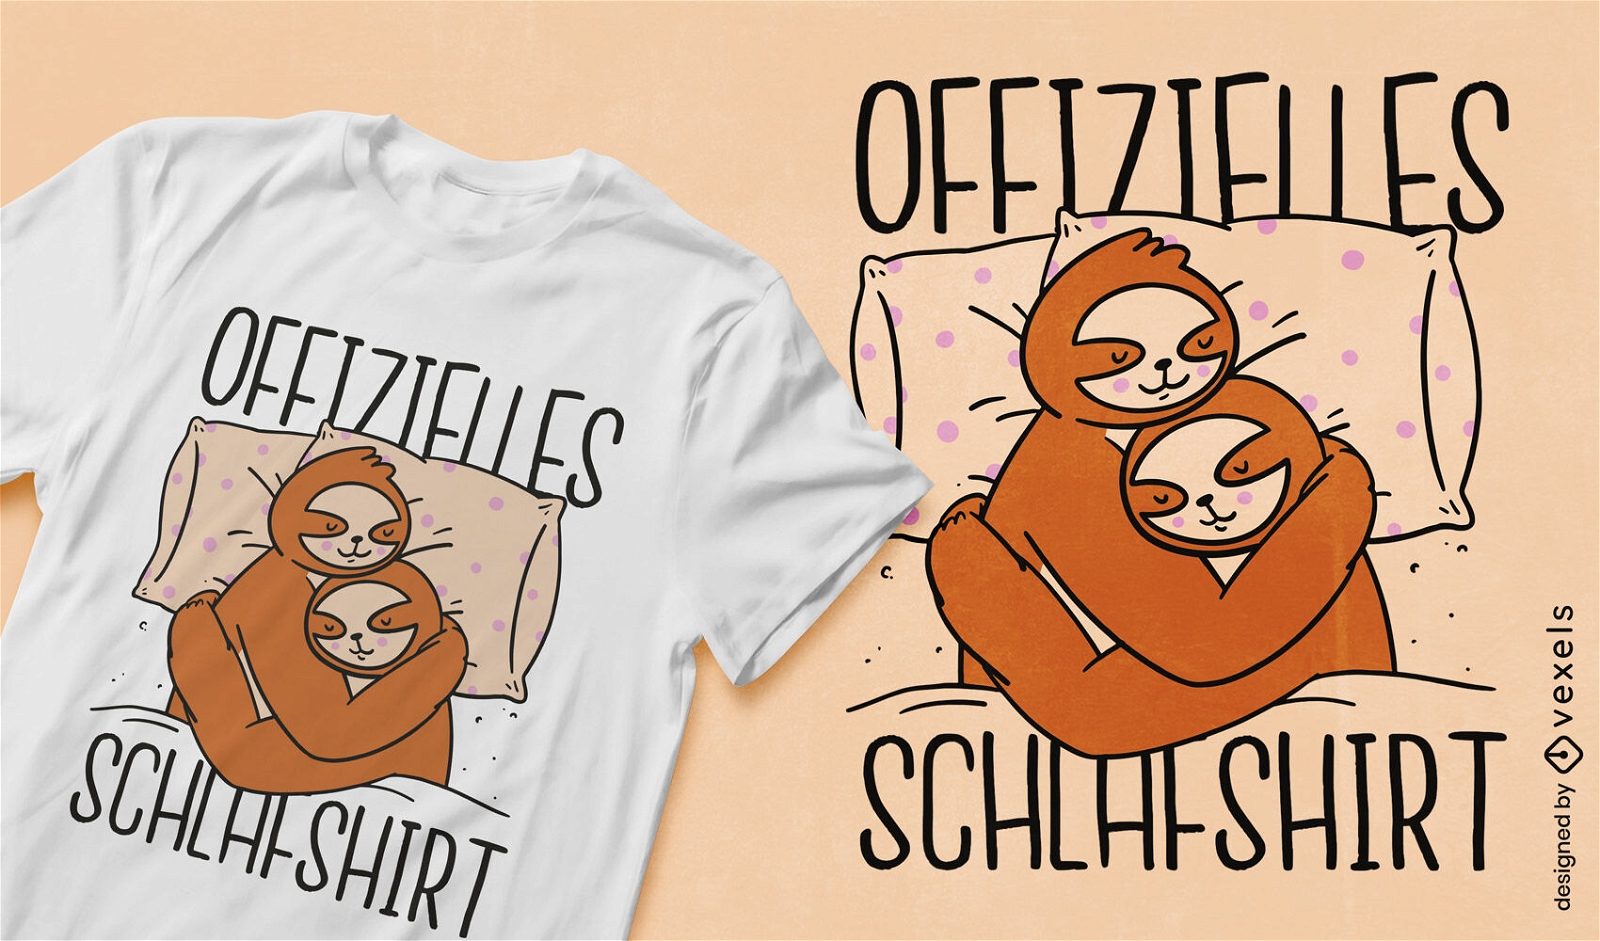 Sloths sleeping on bed t-shirt design